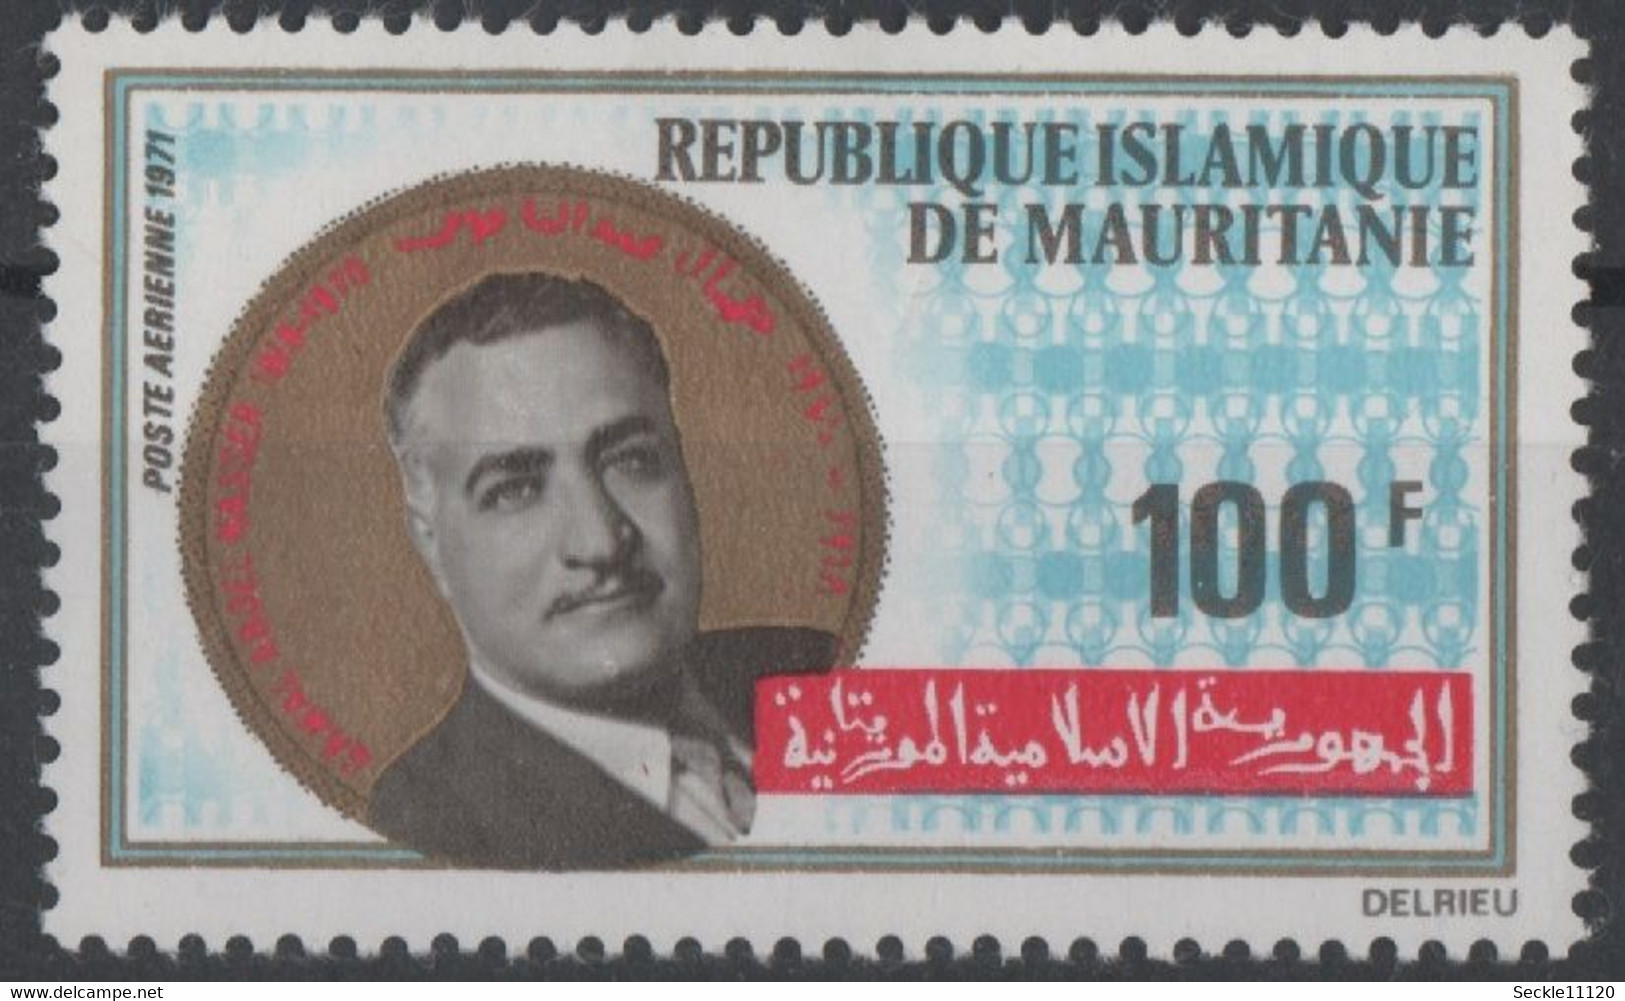 Mauritanie Mauritania - 1971 - Gamal Abdel Nasser - MNH - Mauritanie (1960-...)